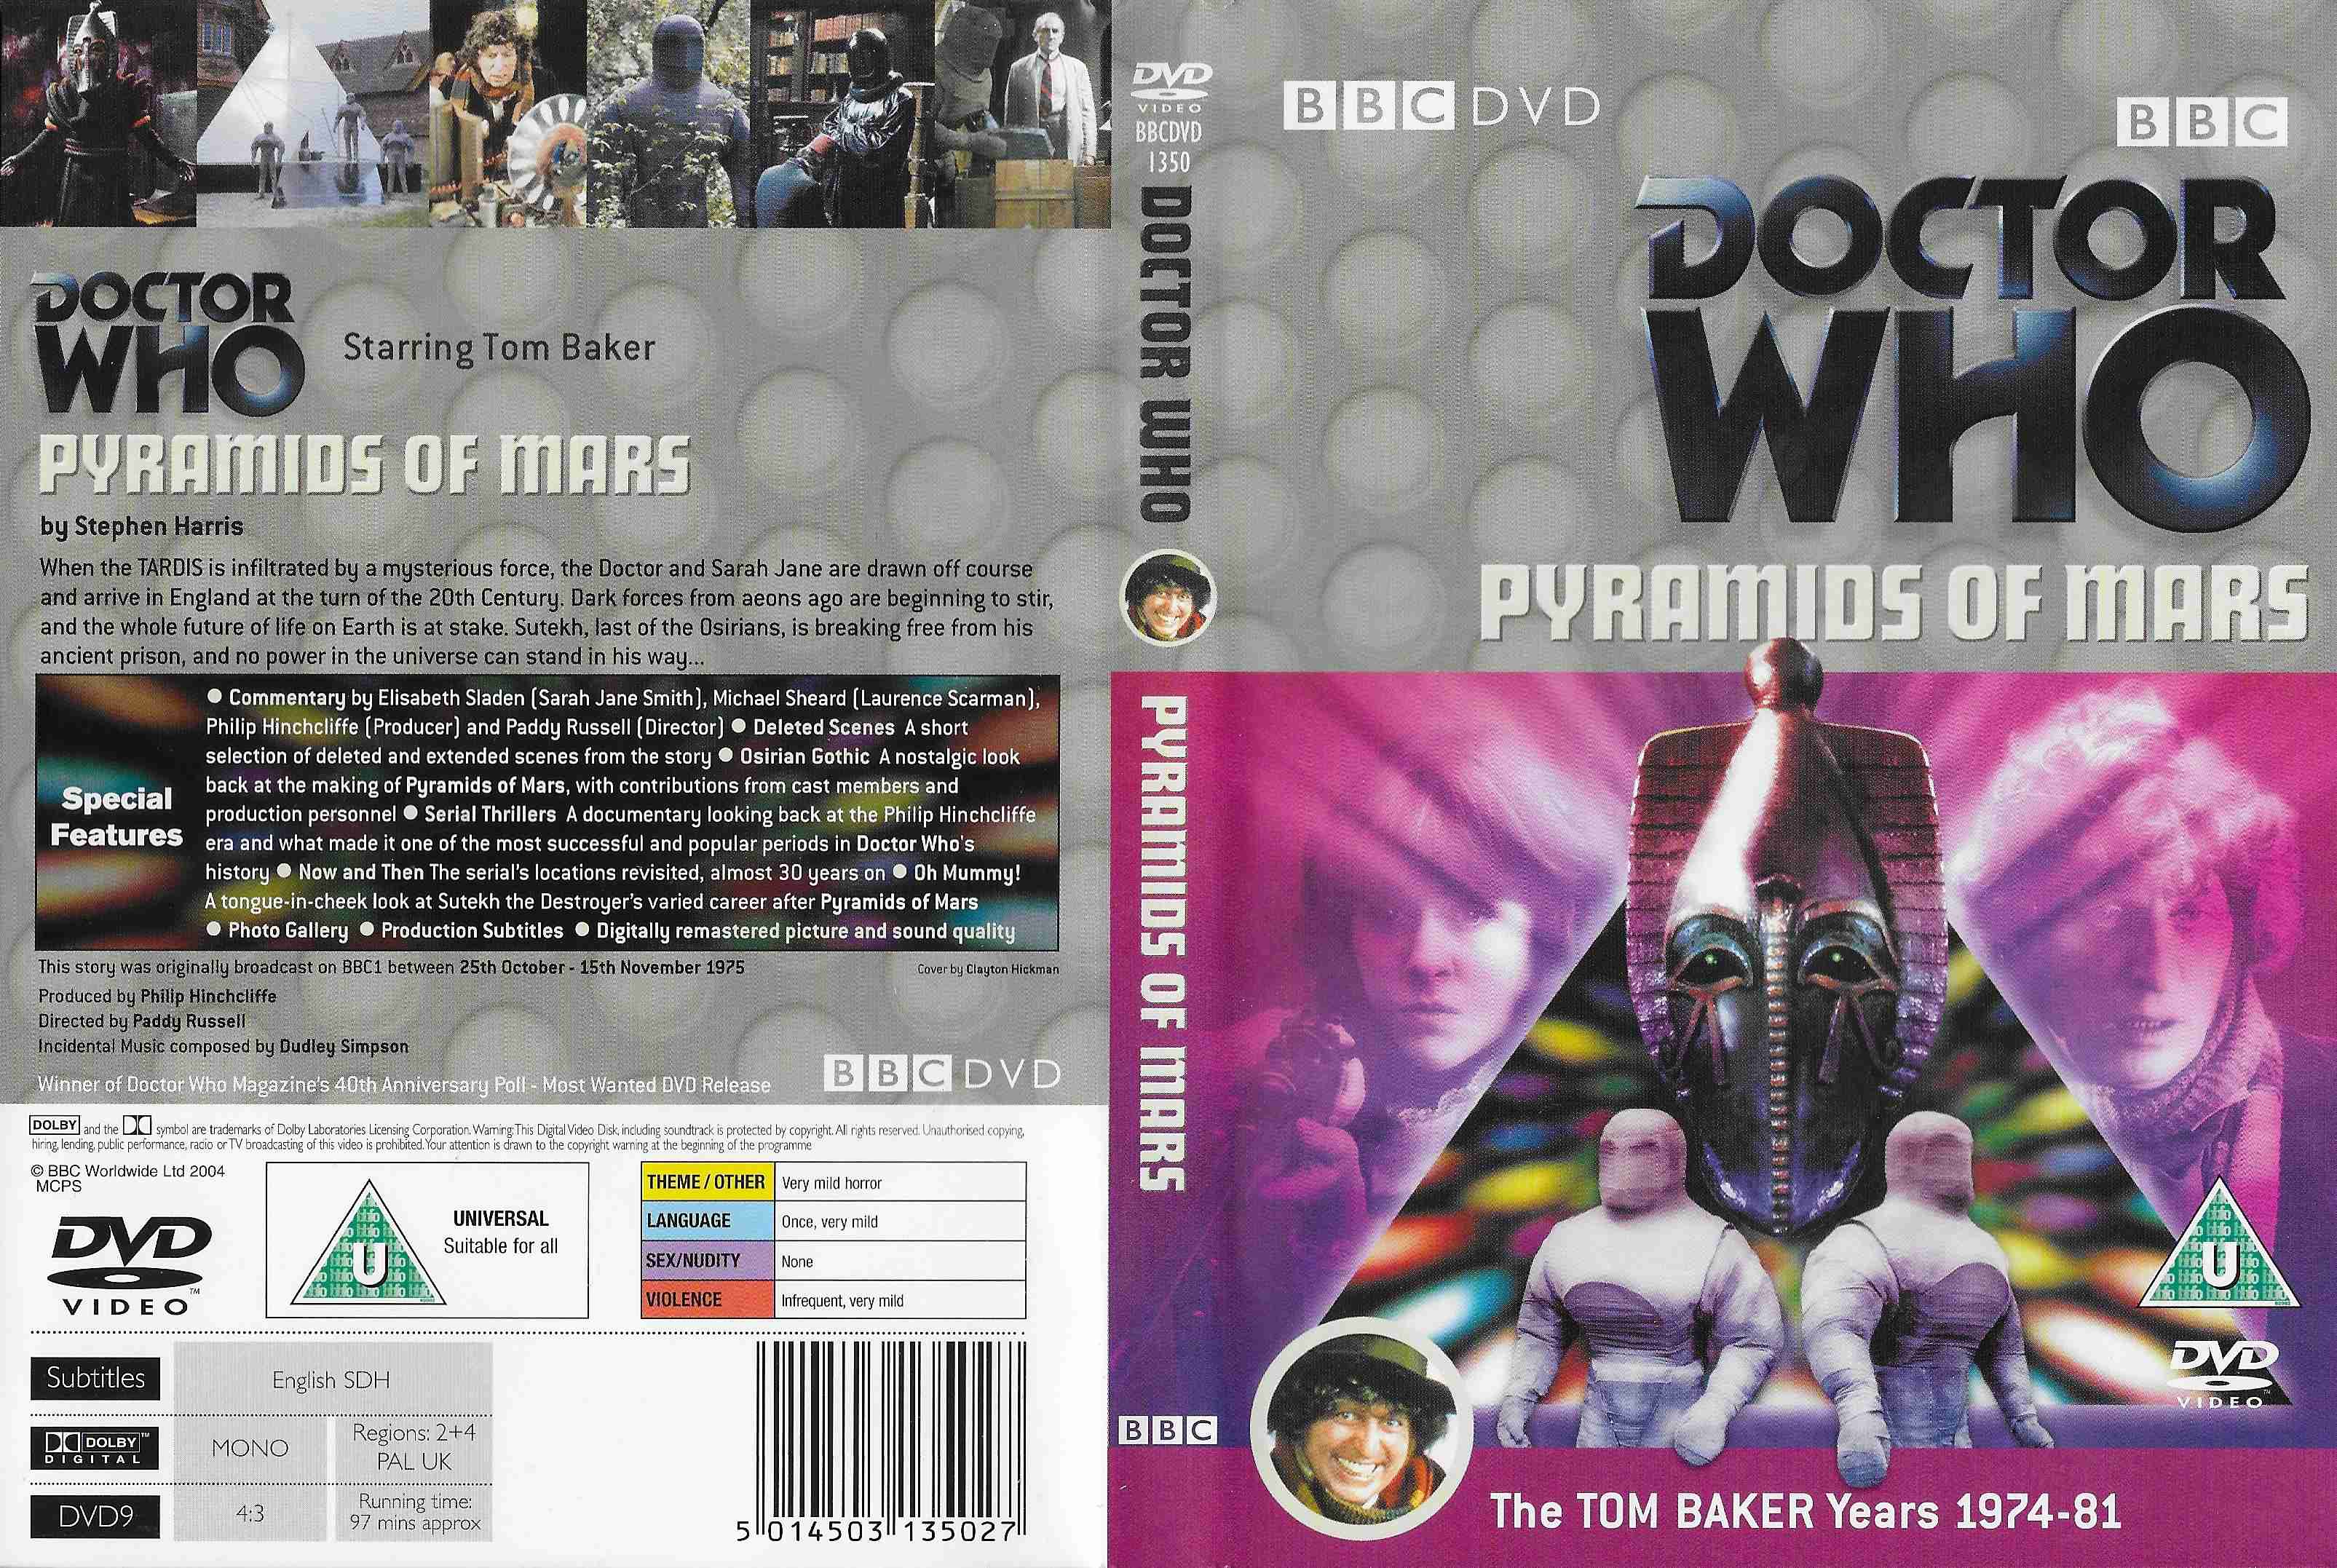 Back cover of BBCDVD 1350